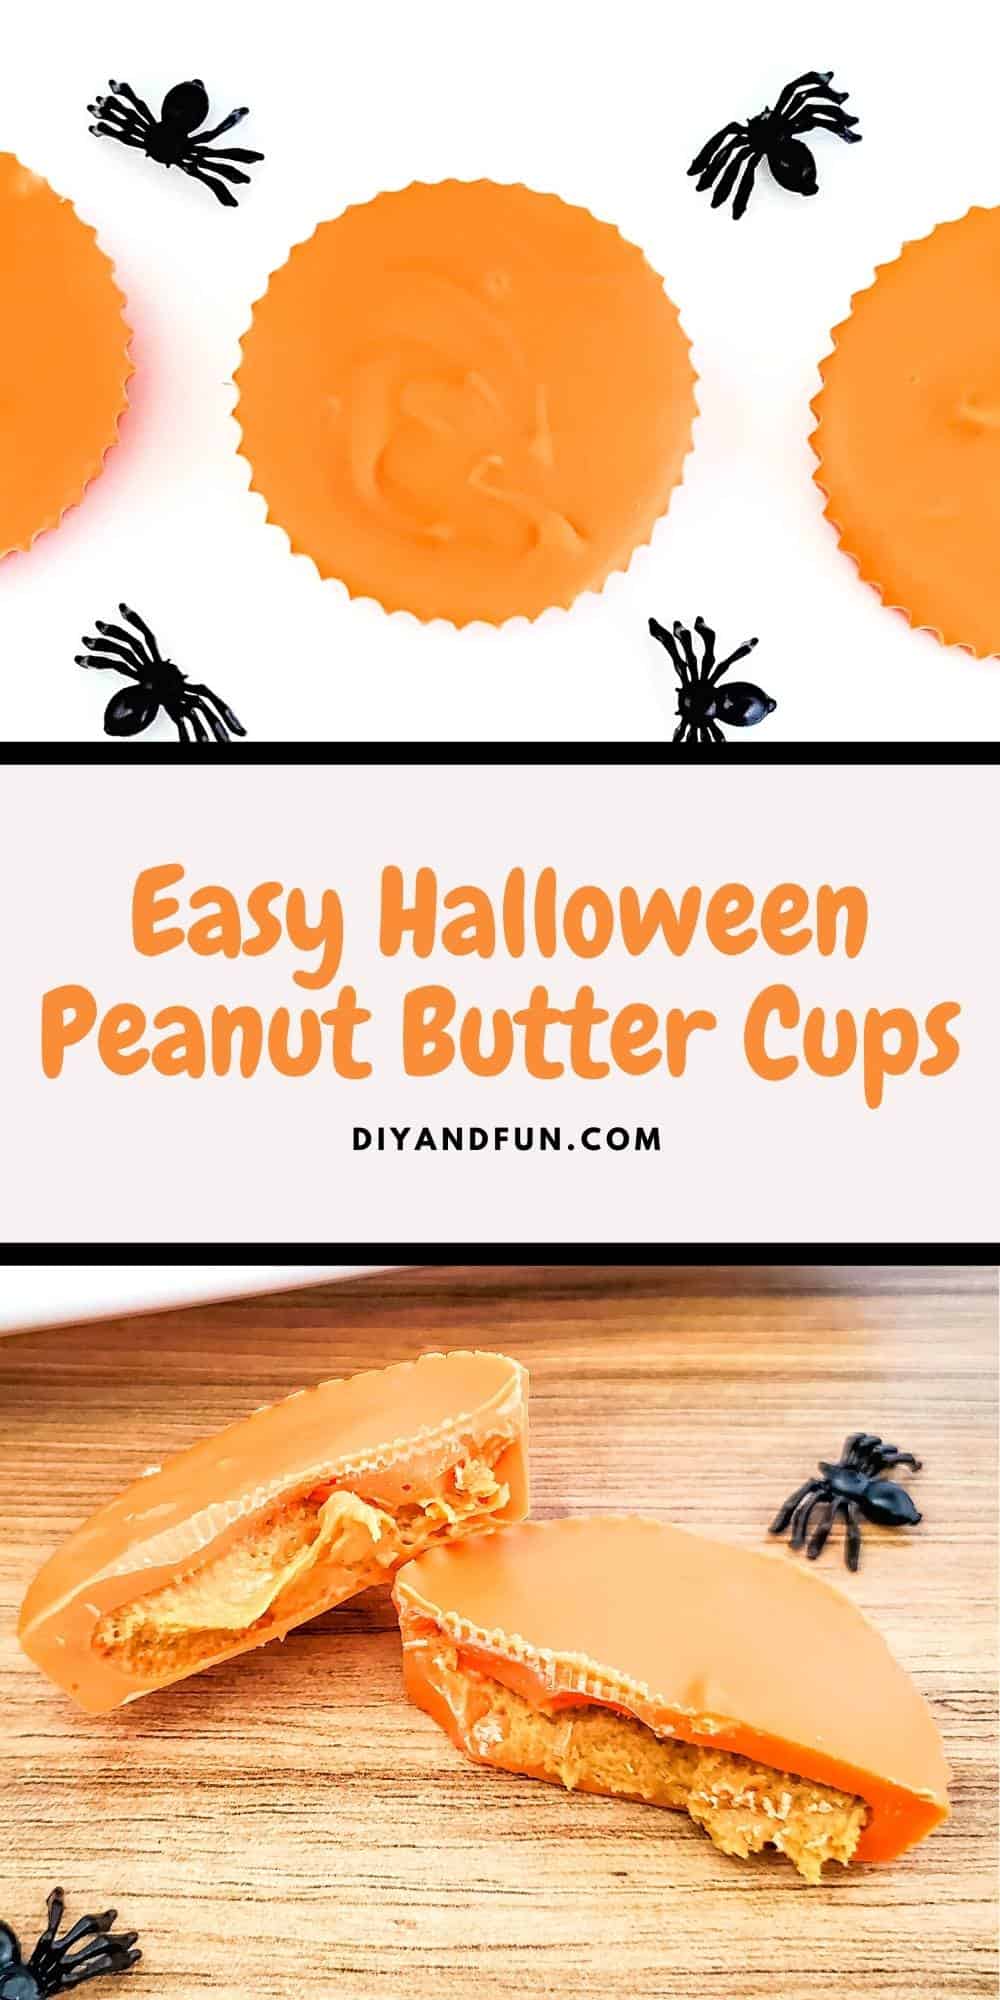 Easy Halloween Peanut Butter Cups